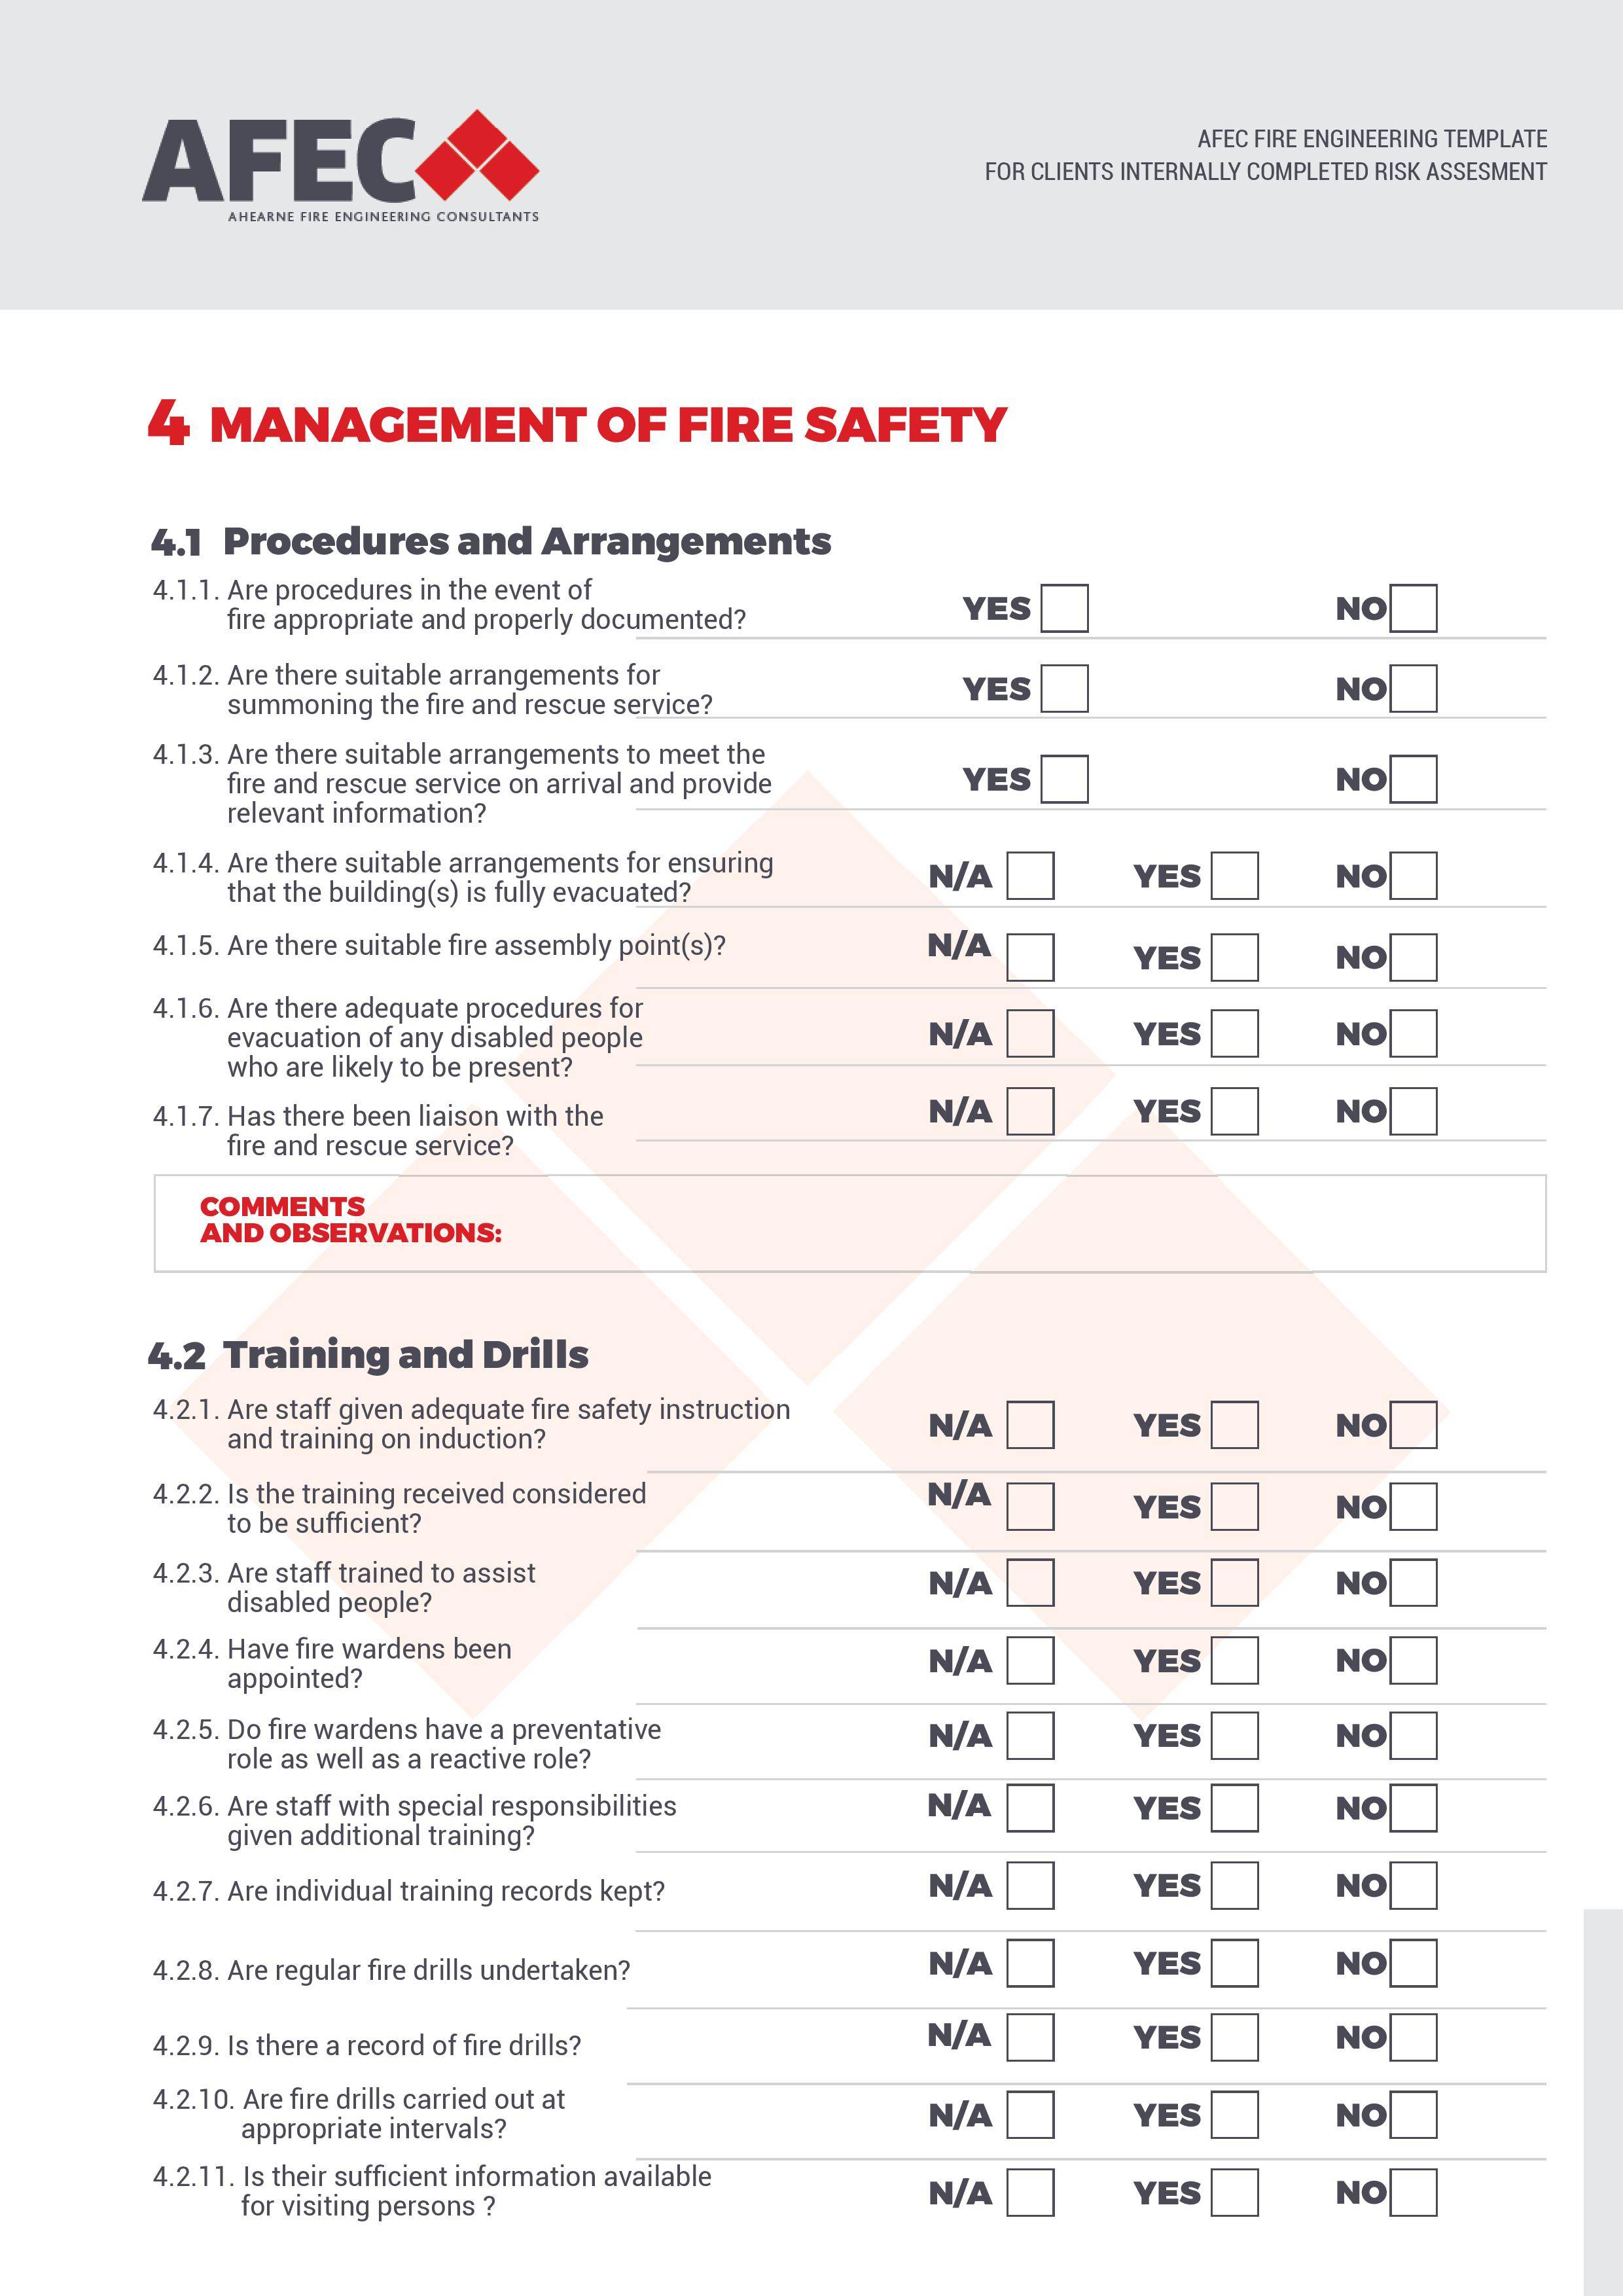 process hazard analysis checklist example